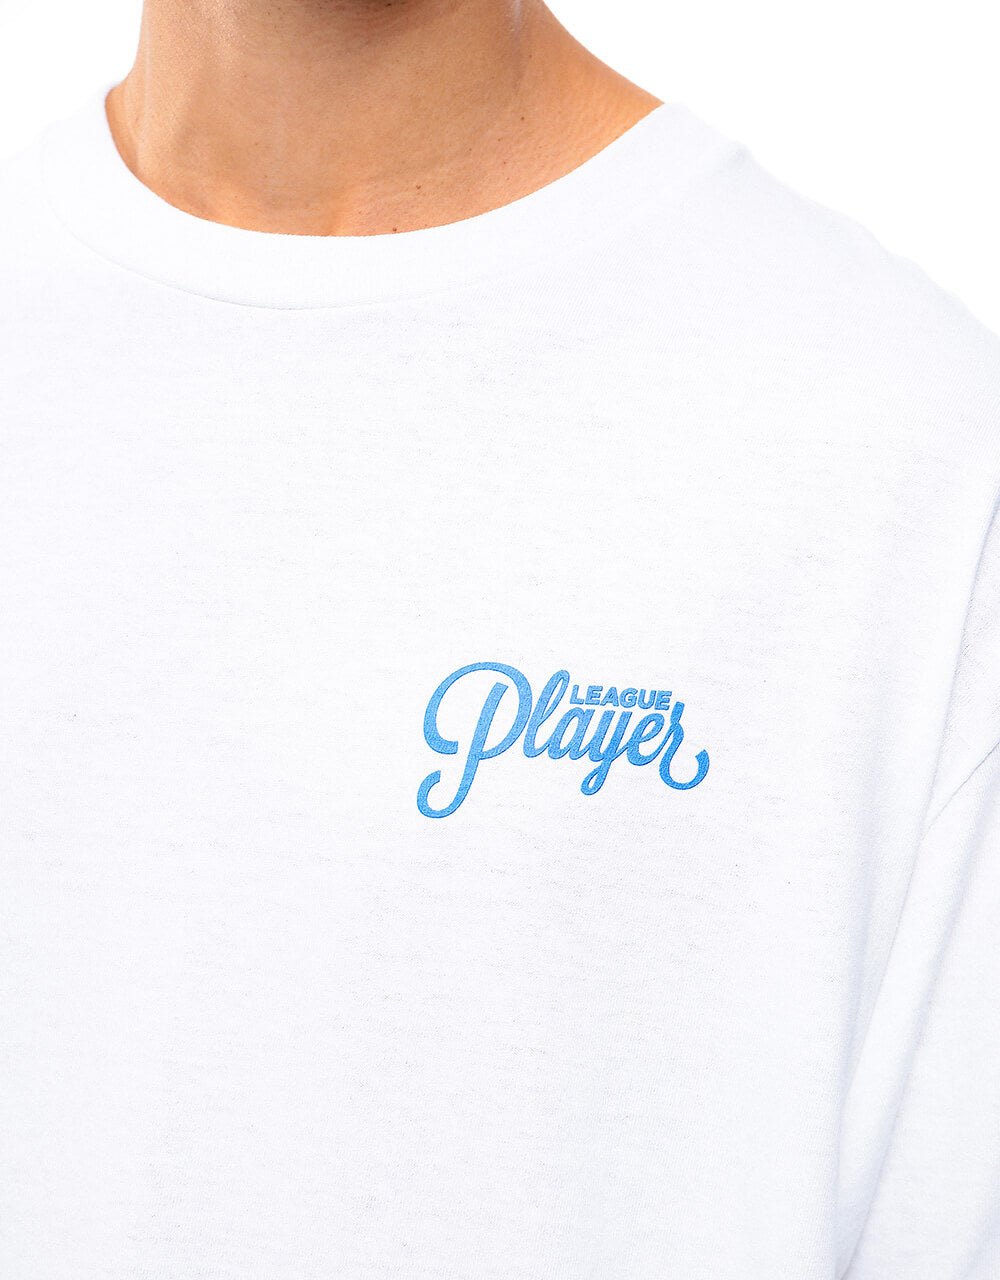 Alltimers Pliskin Player T-Shirt - White